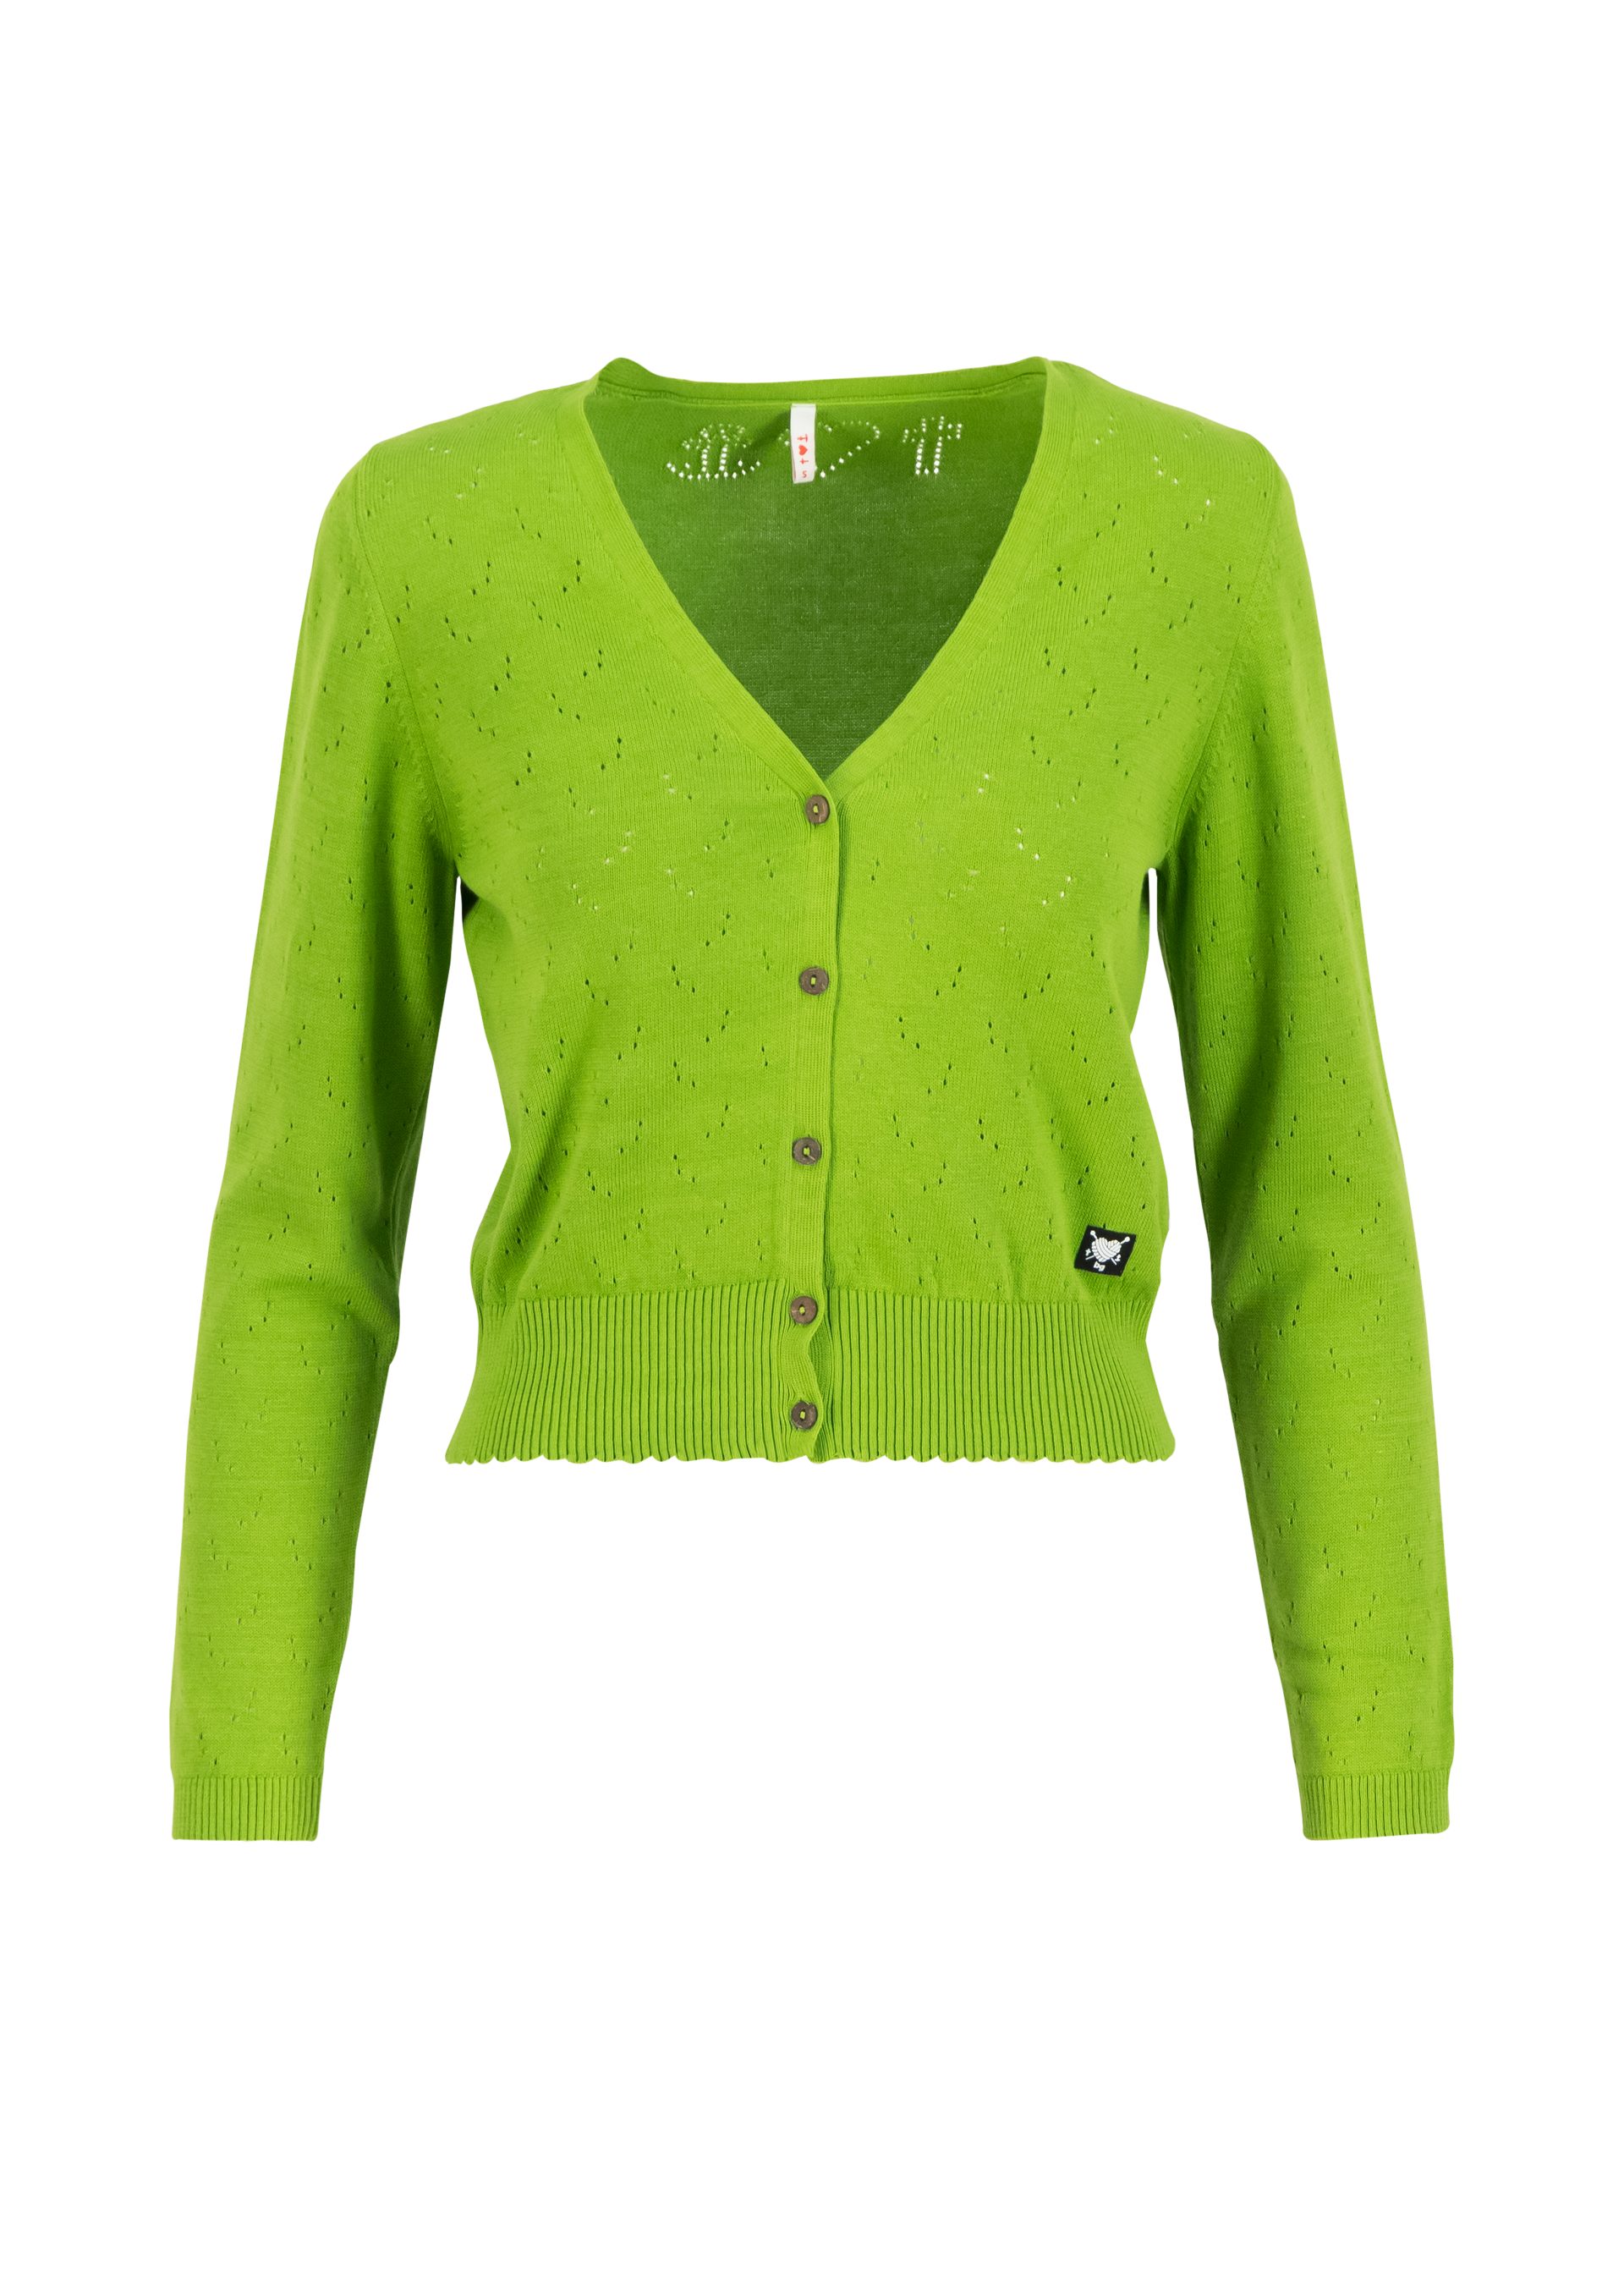 Blutsgeschwister Save - World green knit stunningly the Cardigan